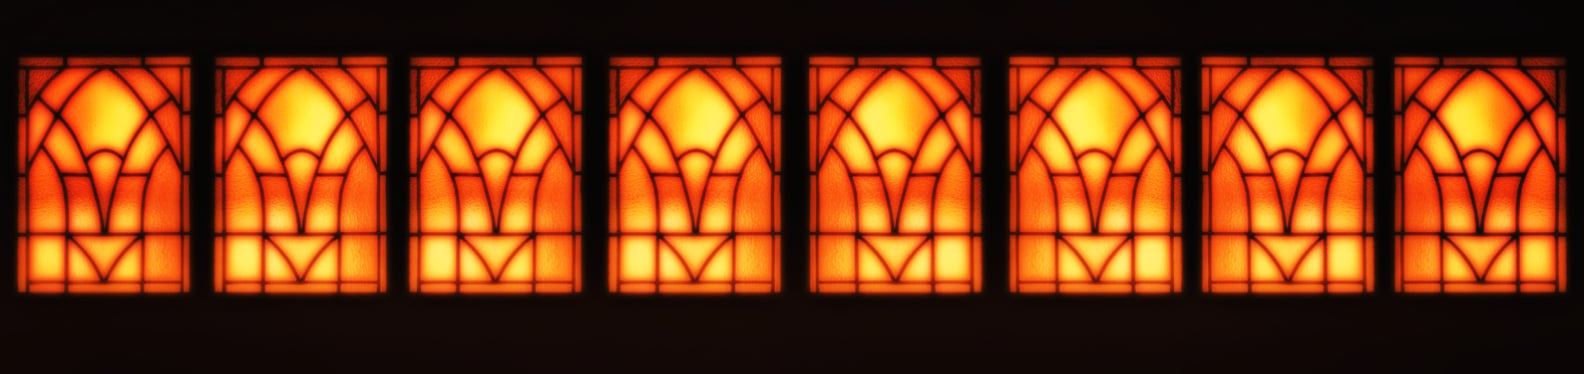 Blurred Door windows with tracery